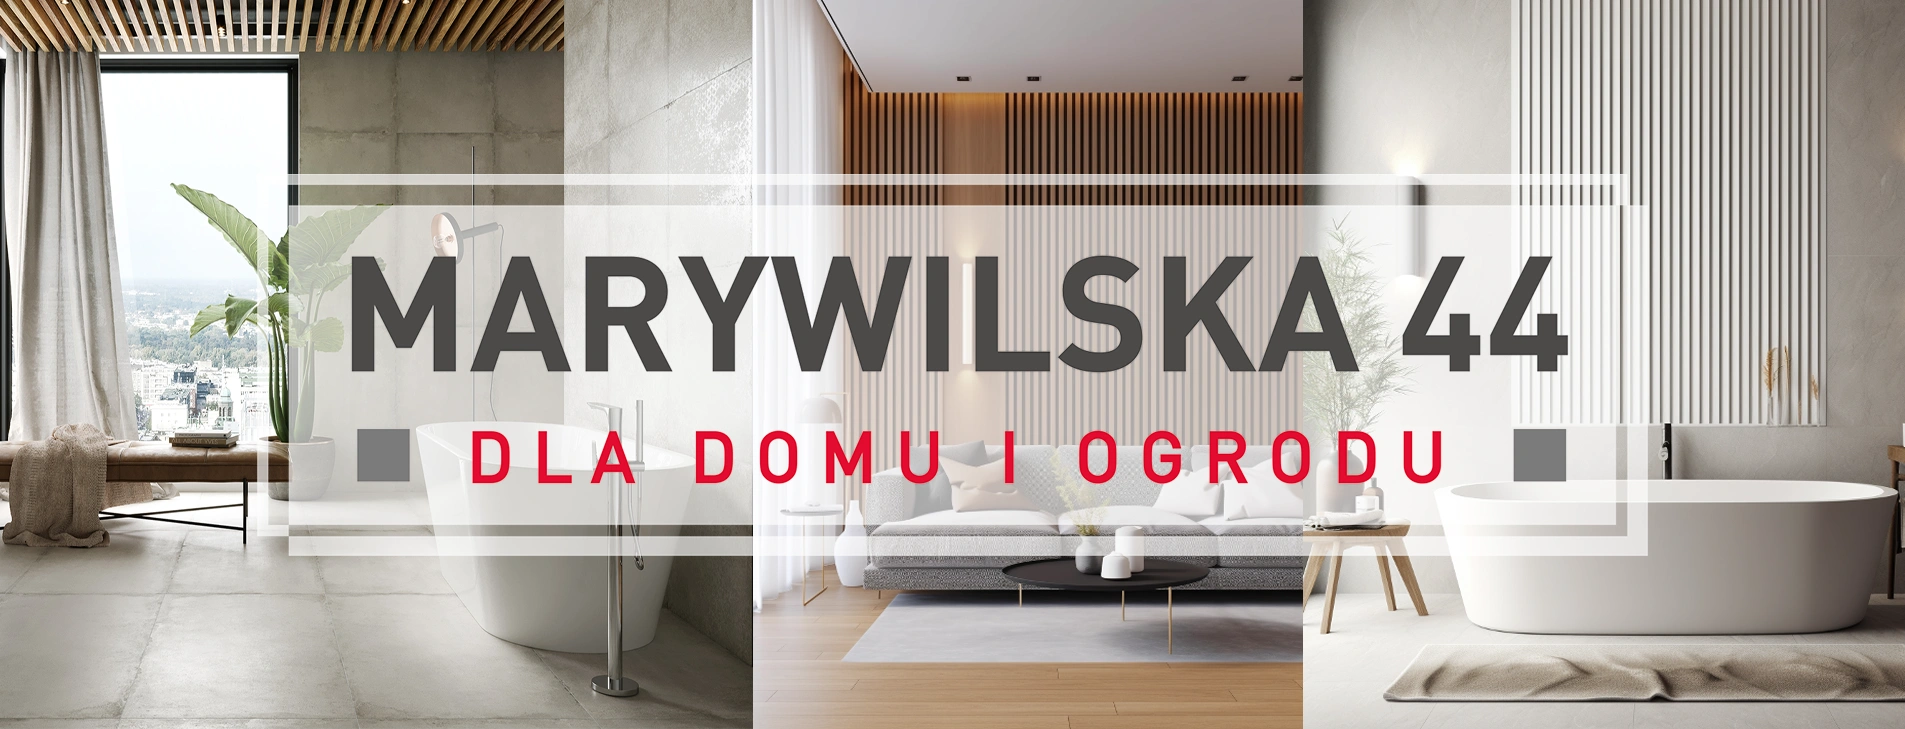 Read more about the article Marywilska 44 dla domu i ogrodu.